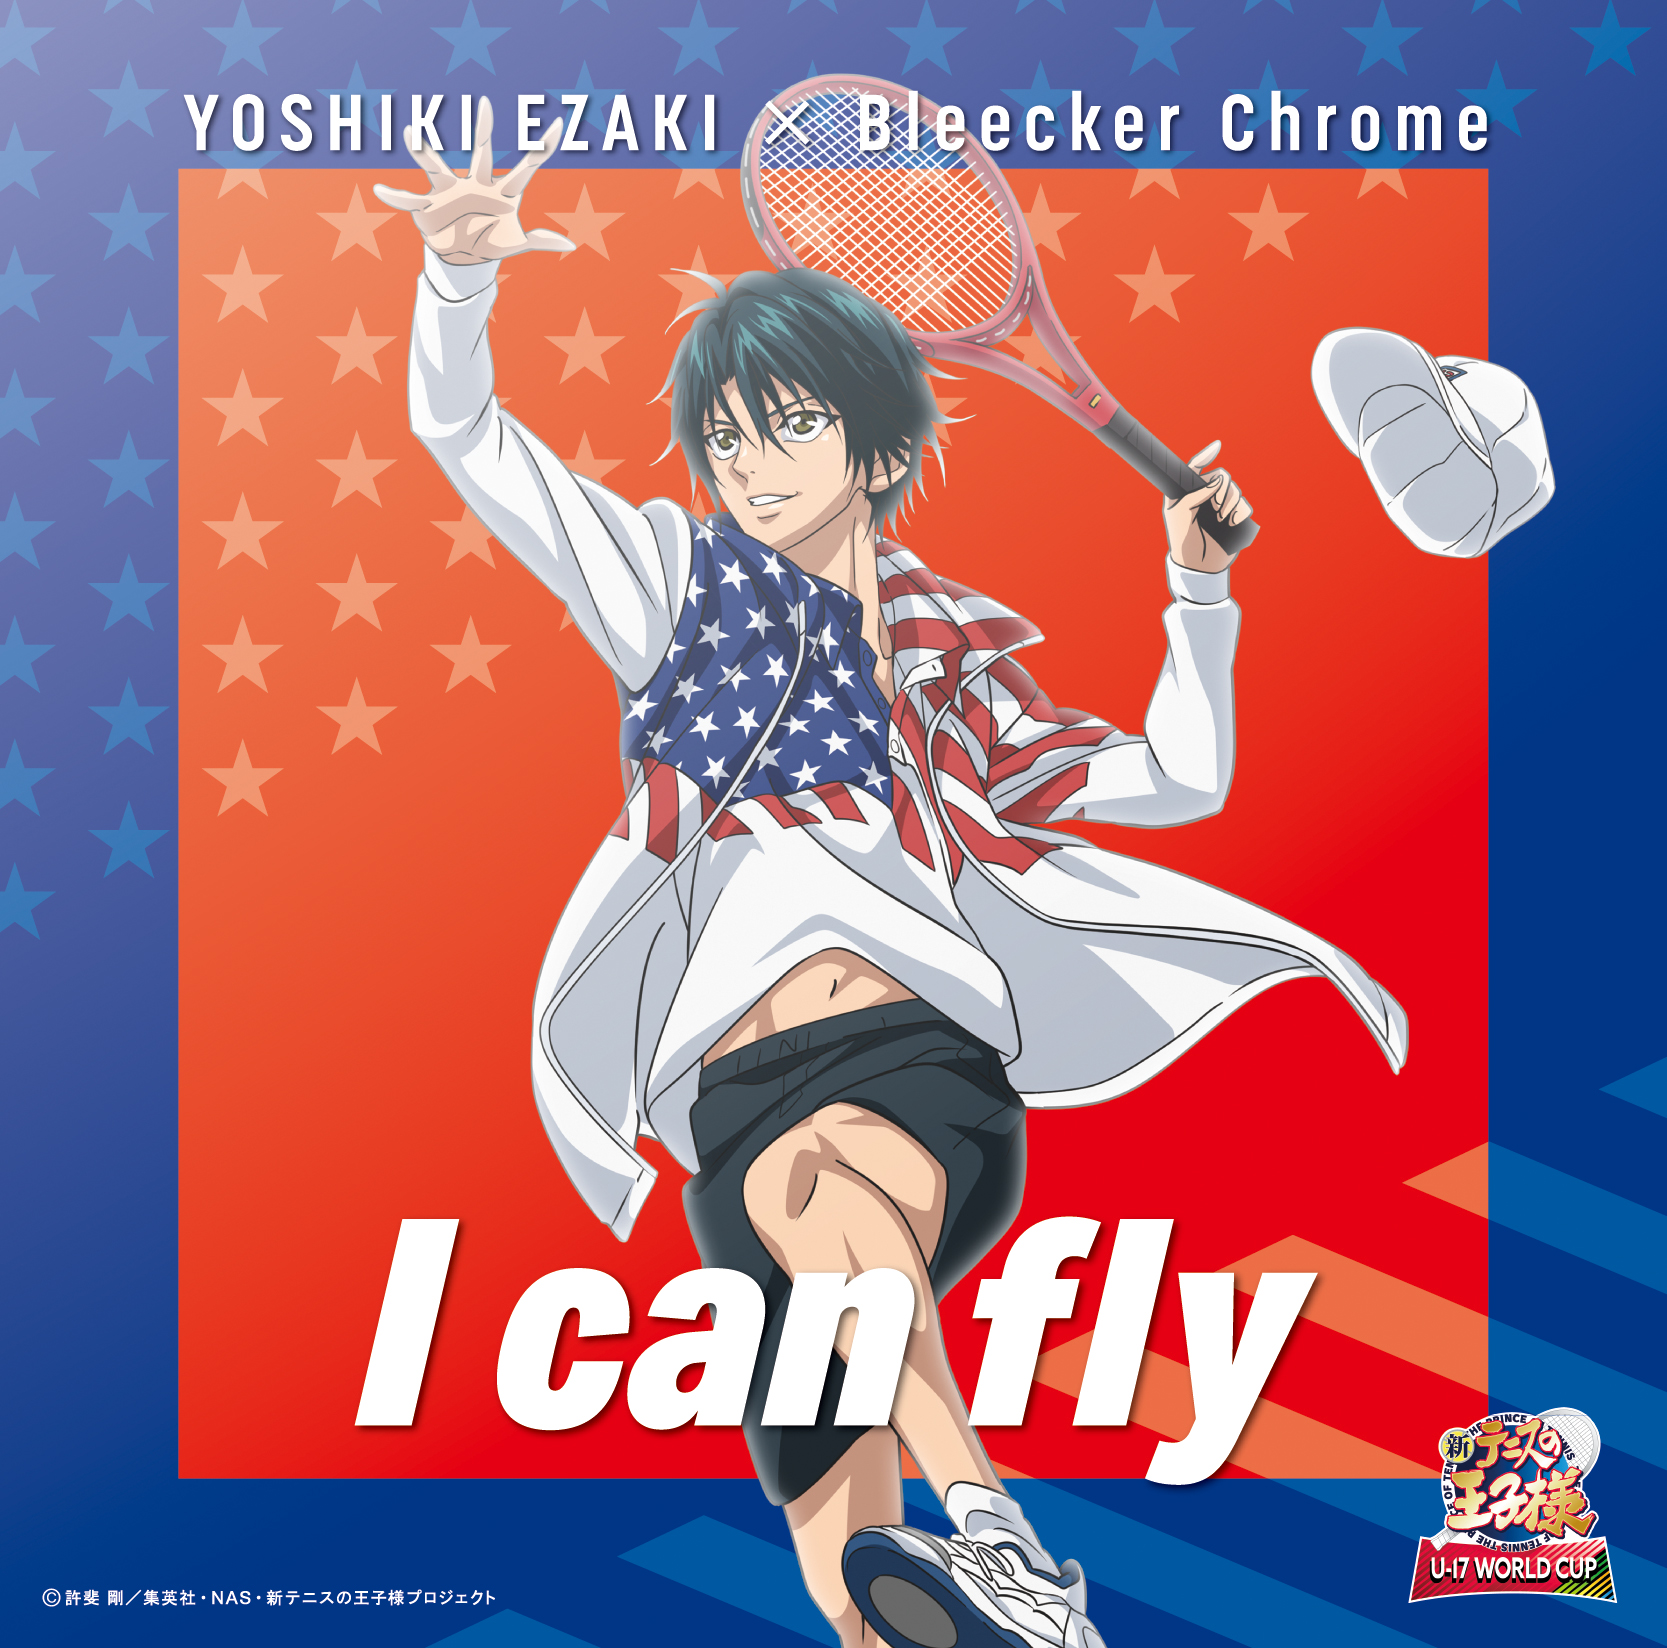 YOSHIKI EZAKI x Bleecker Chrome「I can fly」【初回仕様限定盤】(TYPE-A)